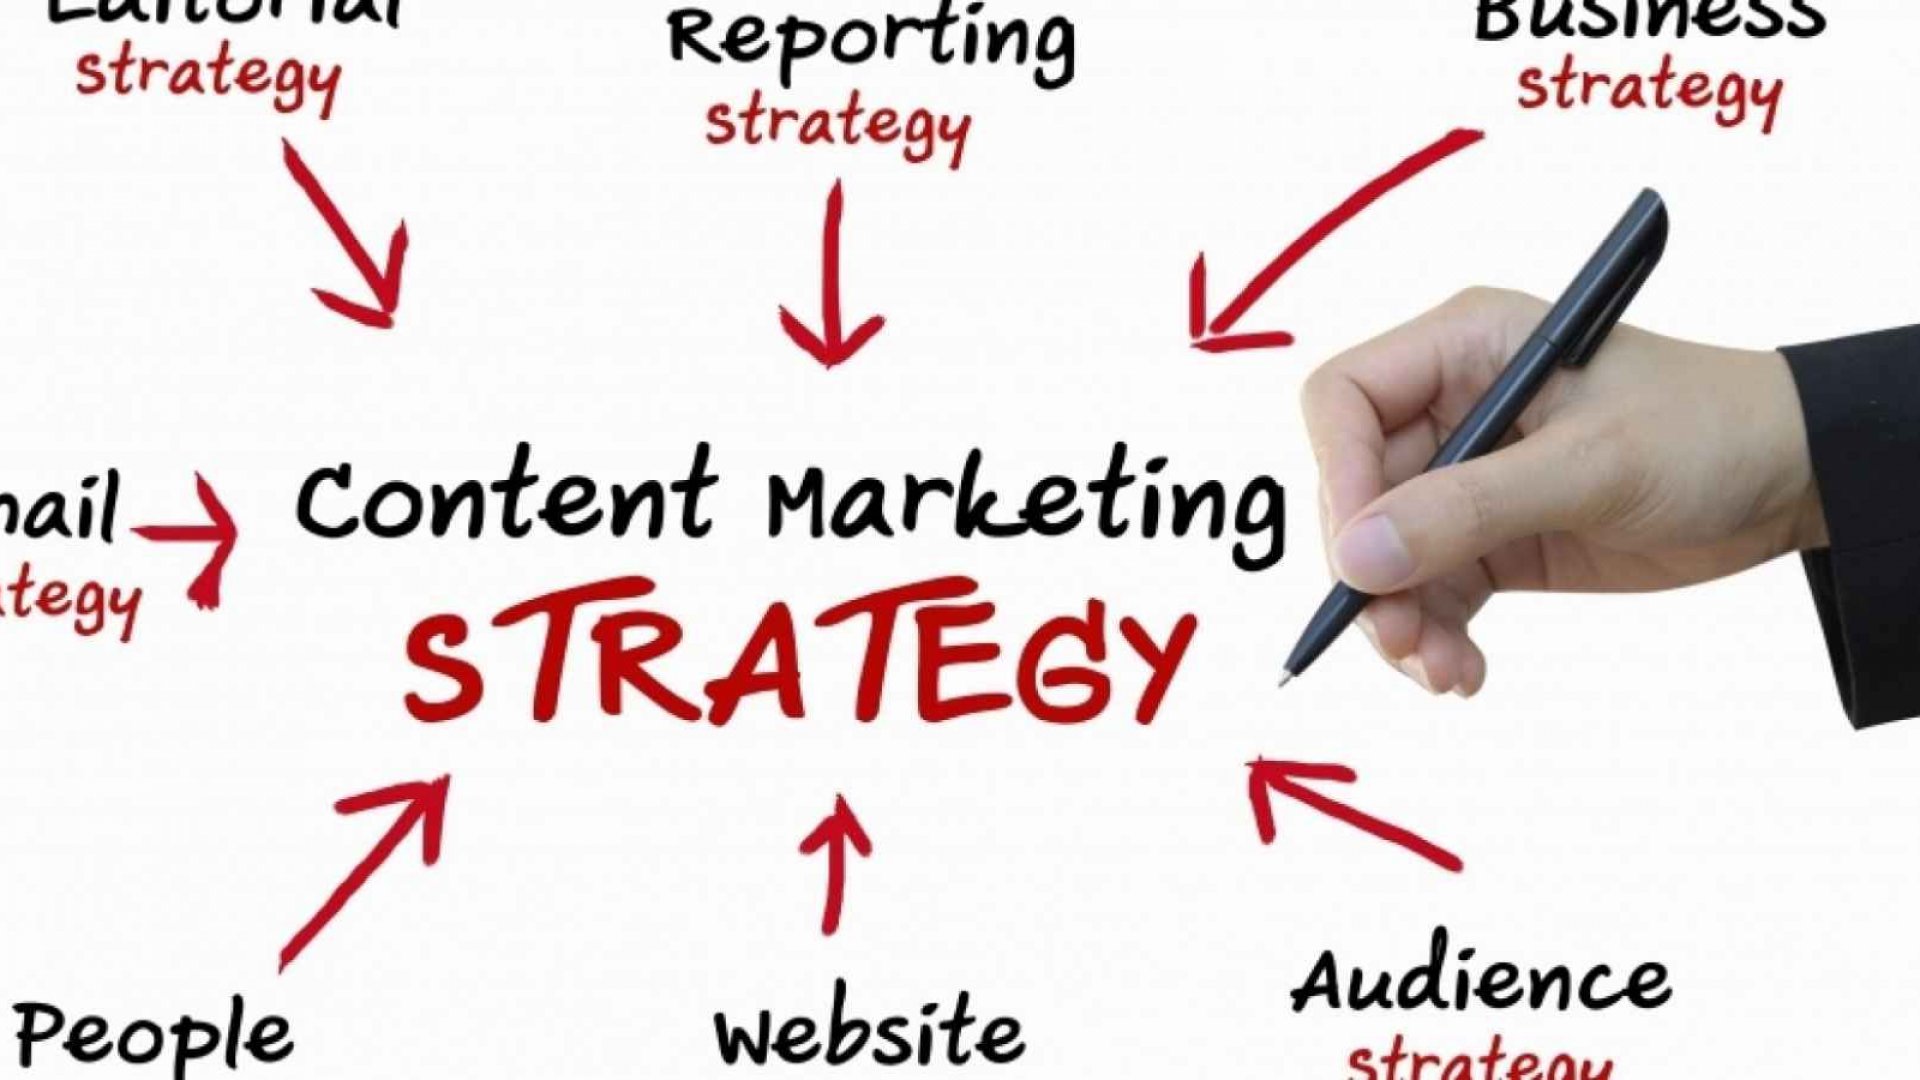 content marketing platforms